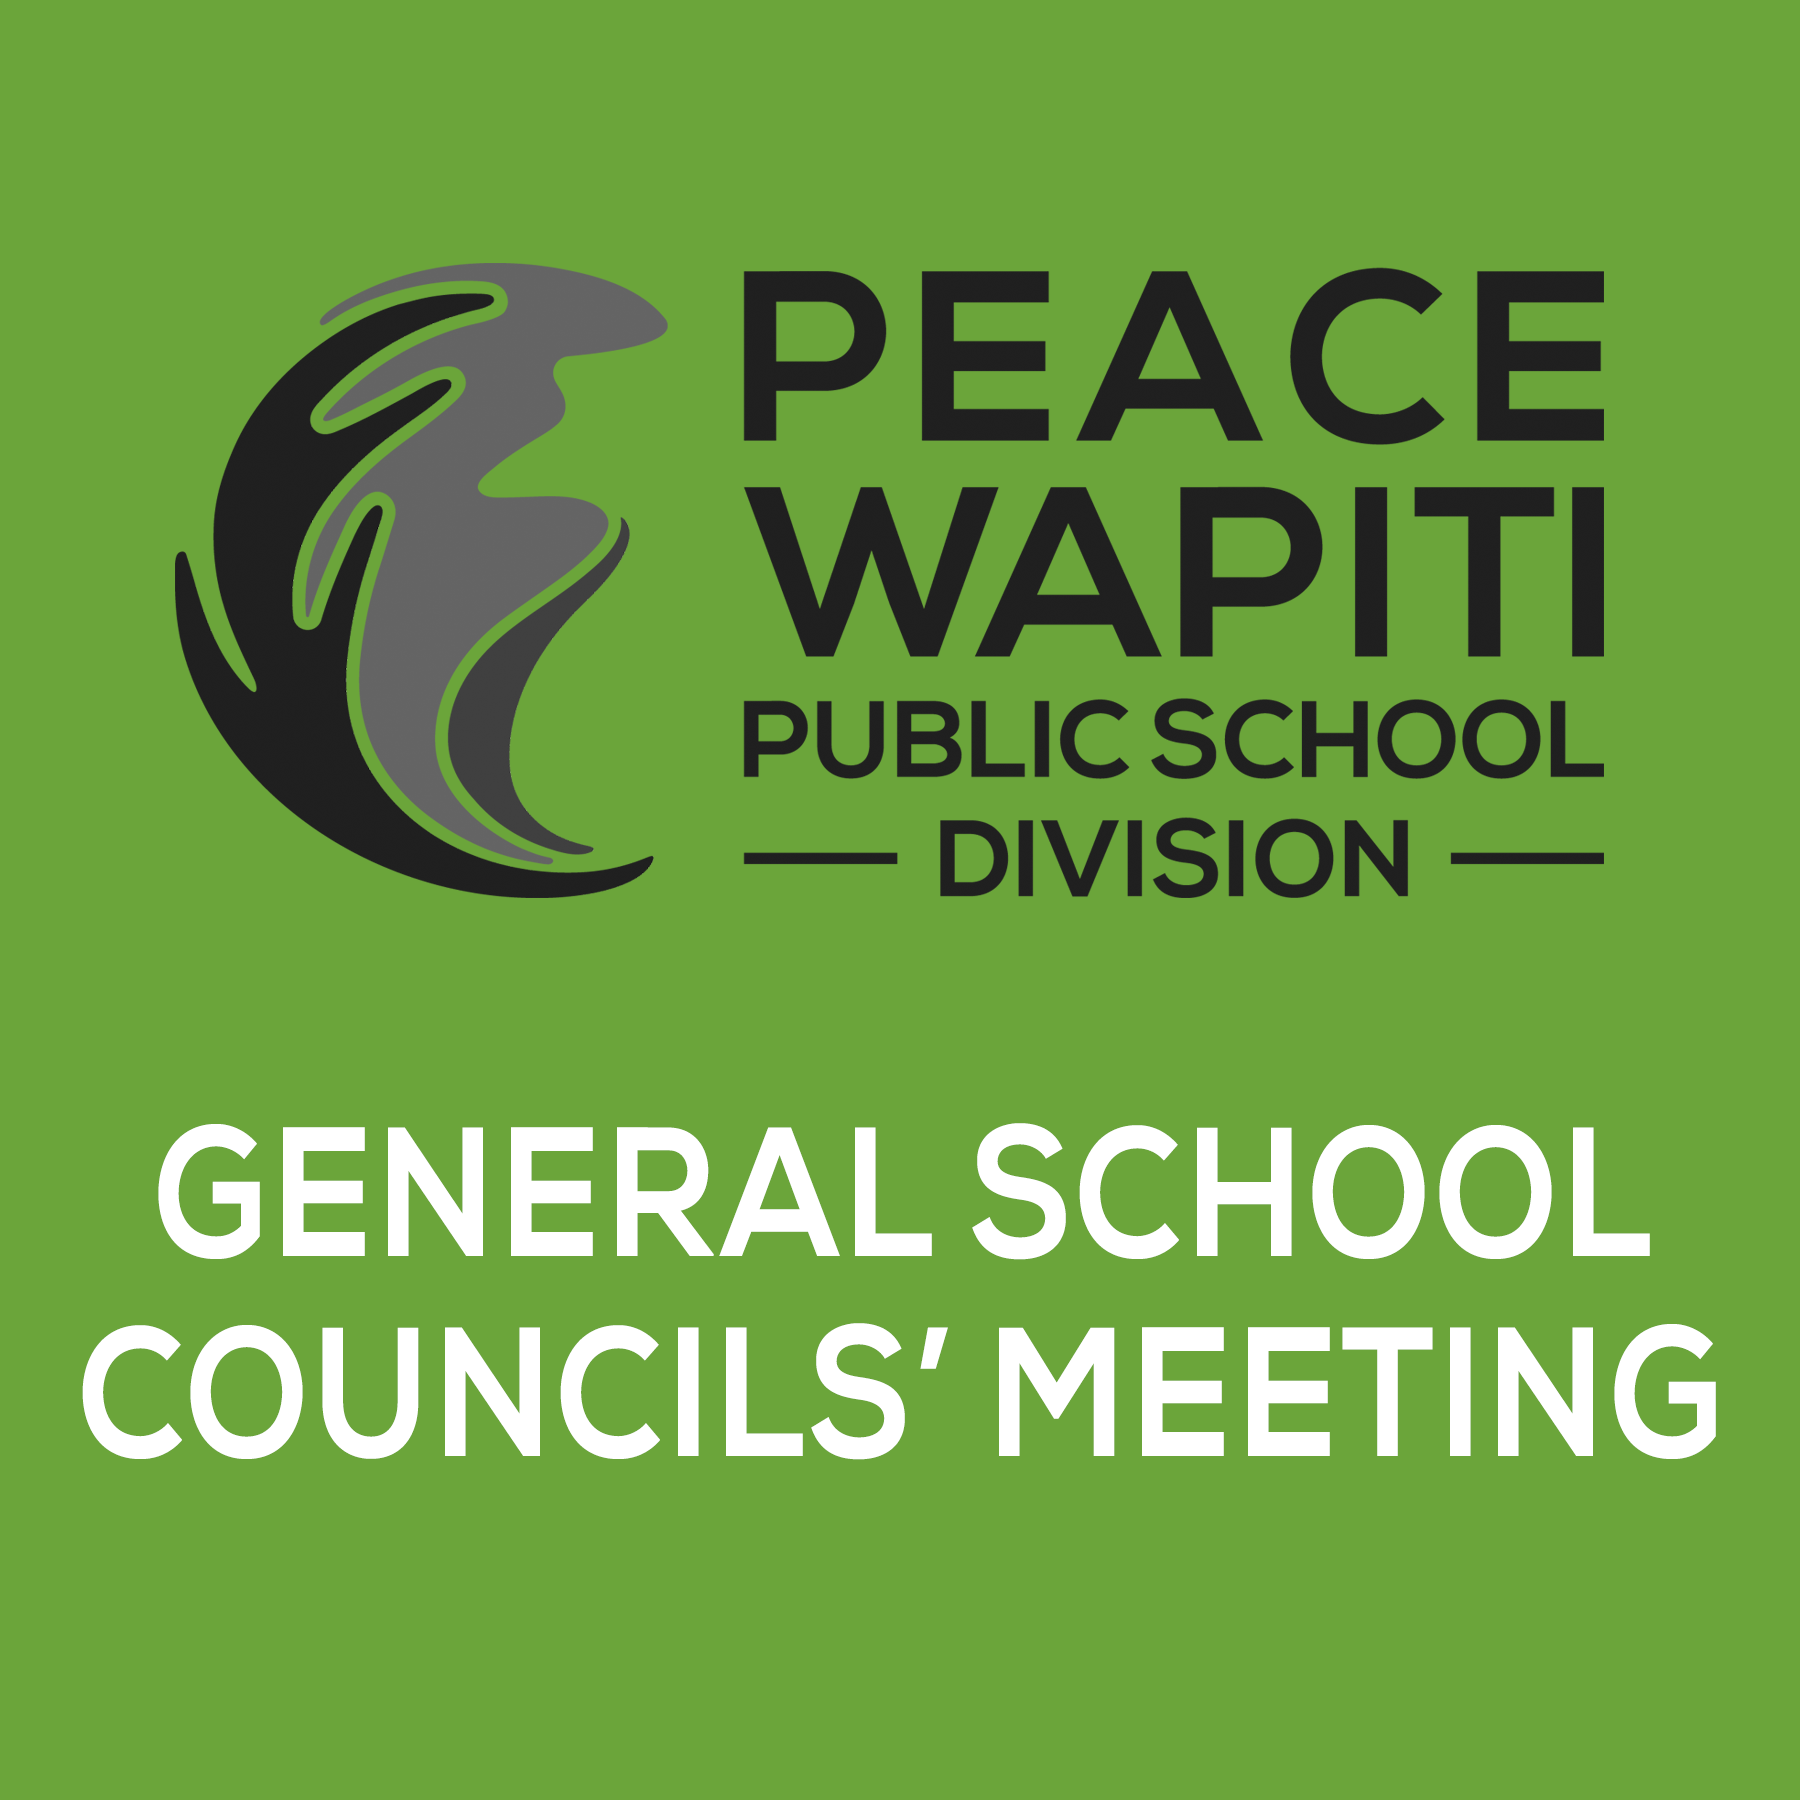 general school councils meeting logo